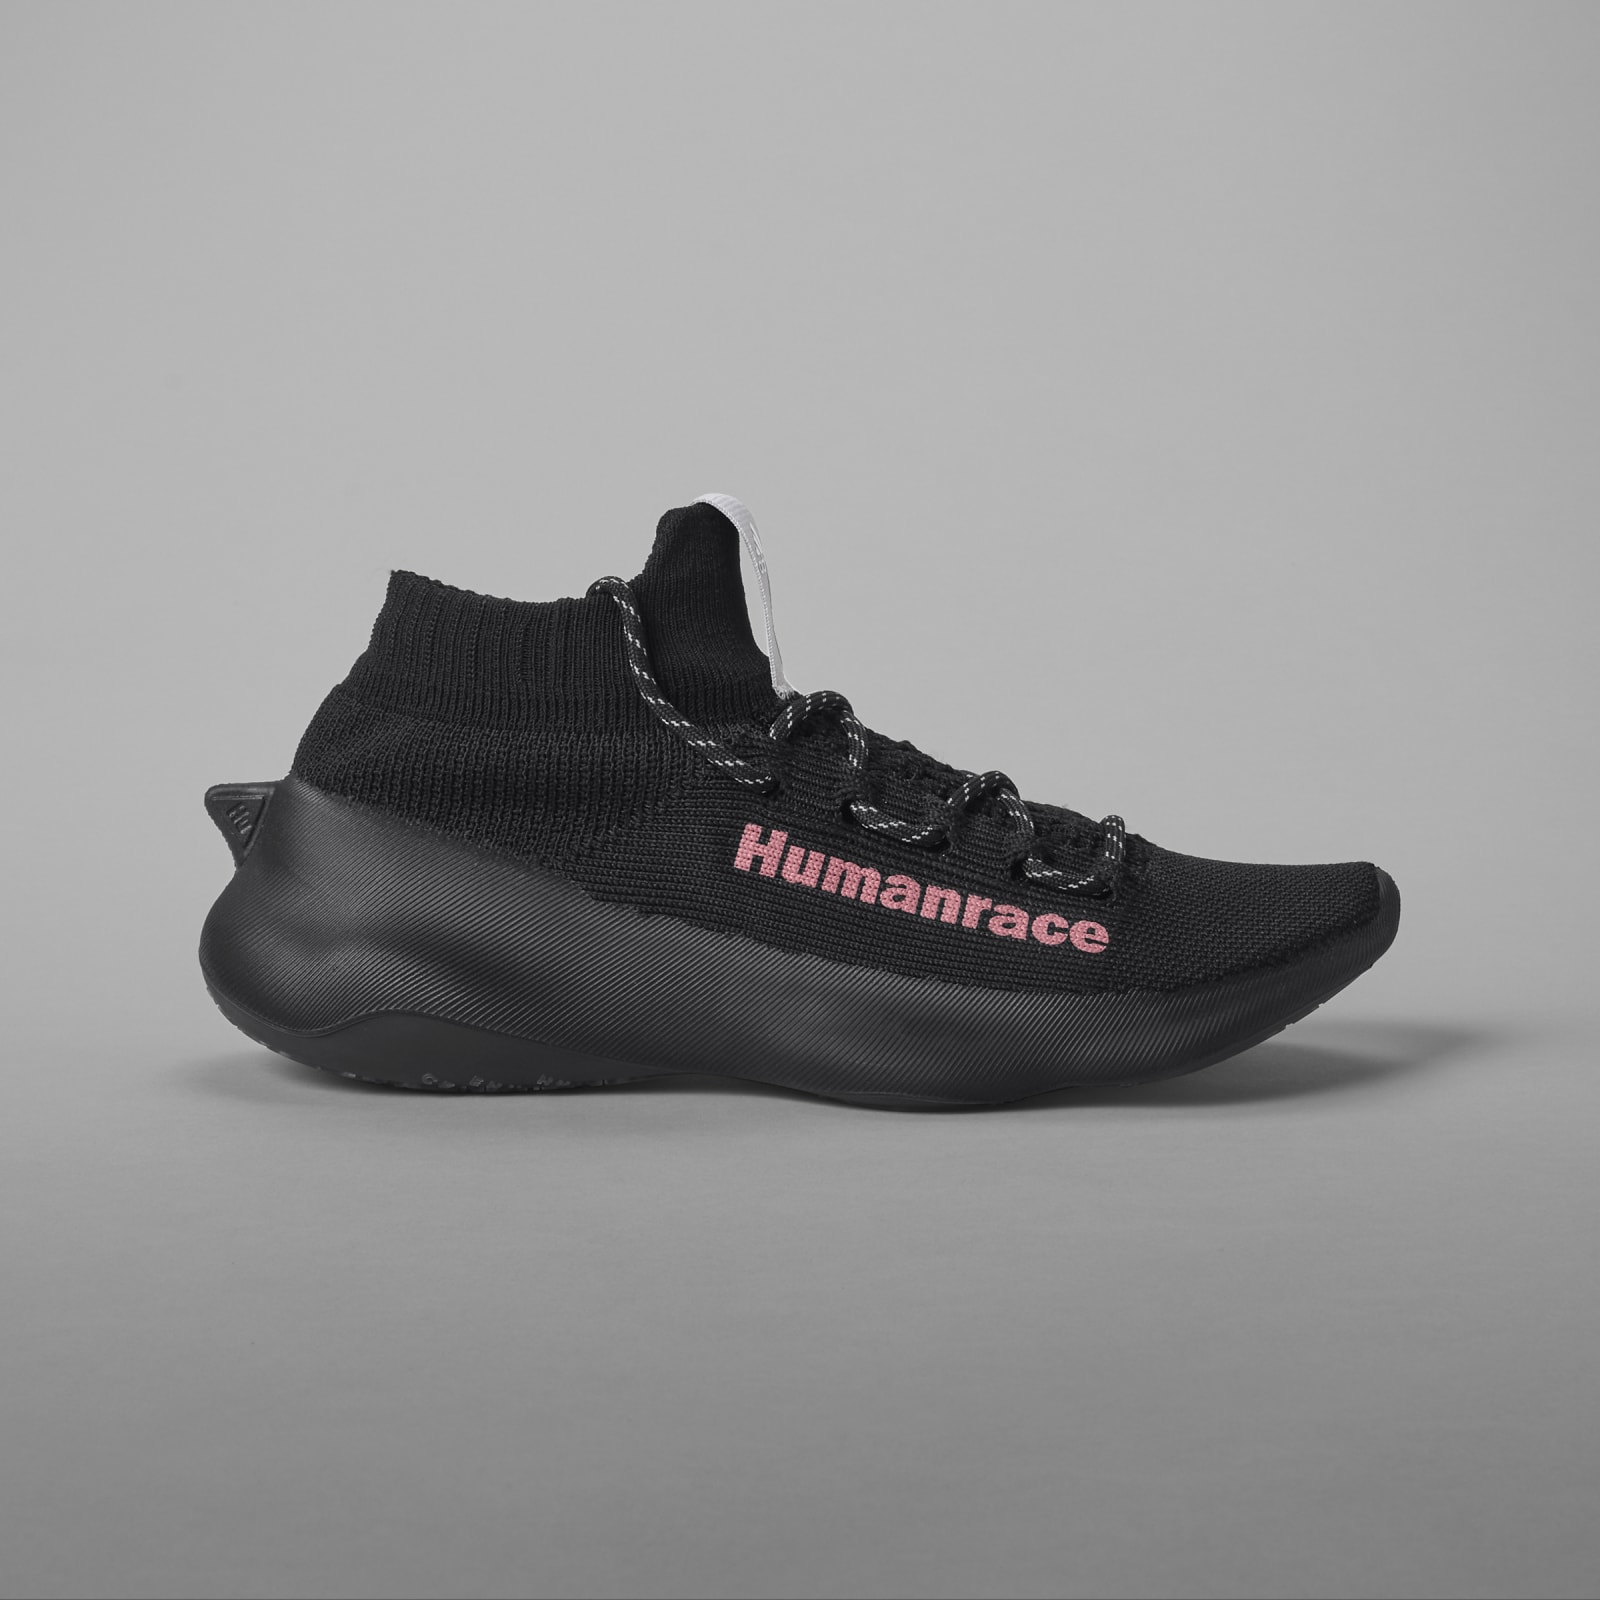 Pharrell x Adidas Humanrace
Sichona Black